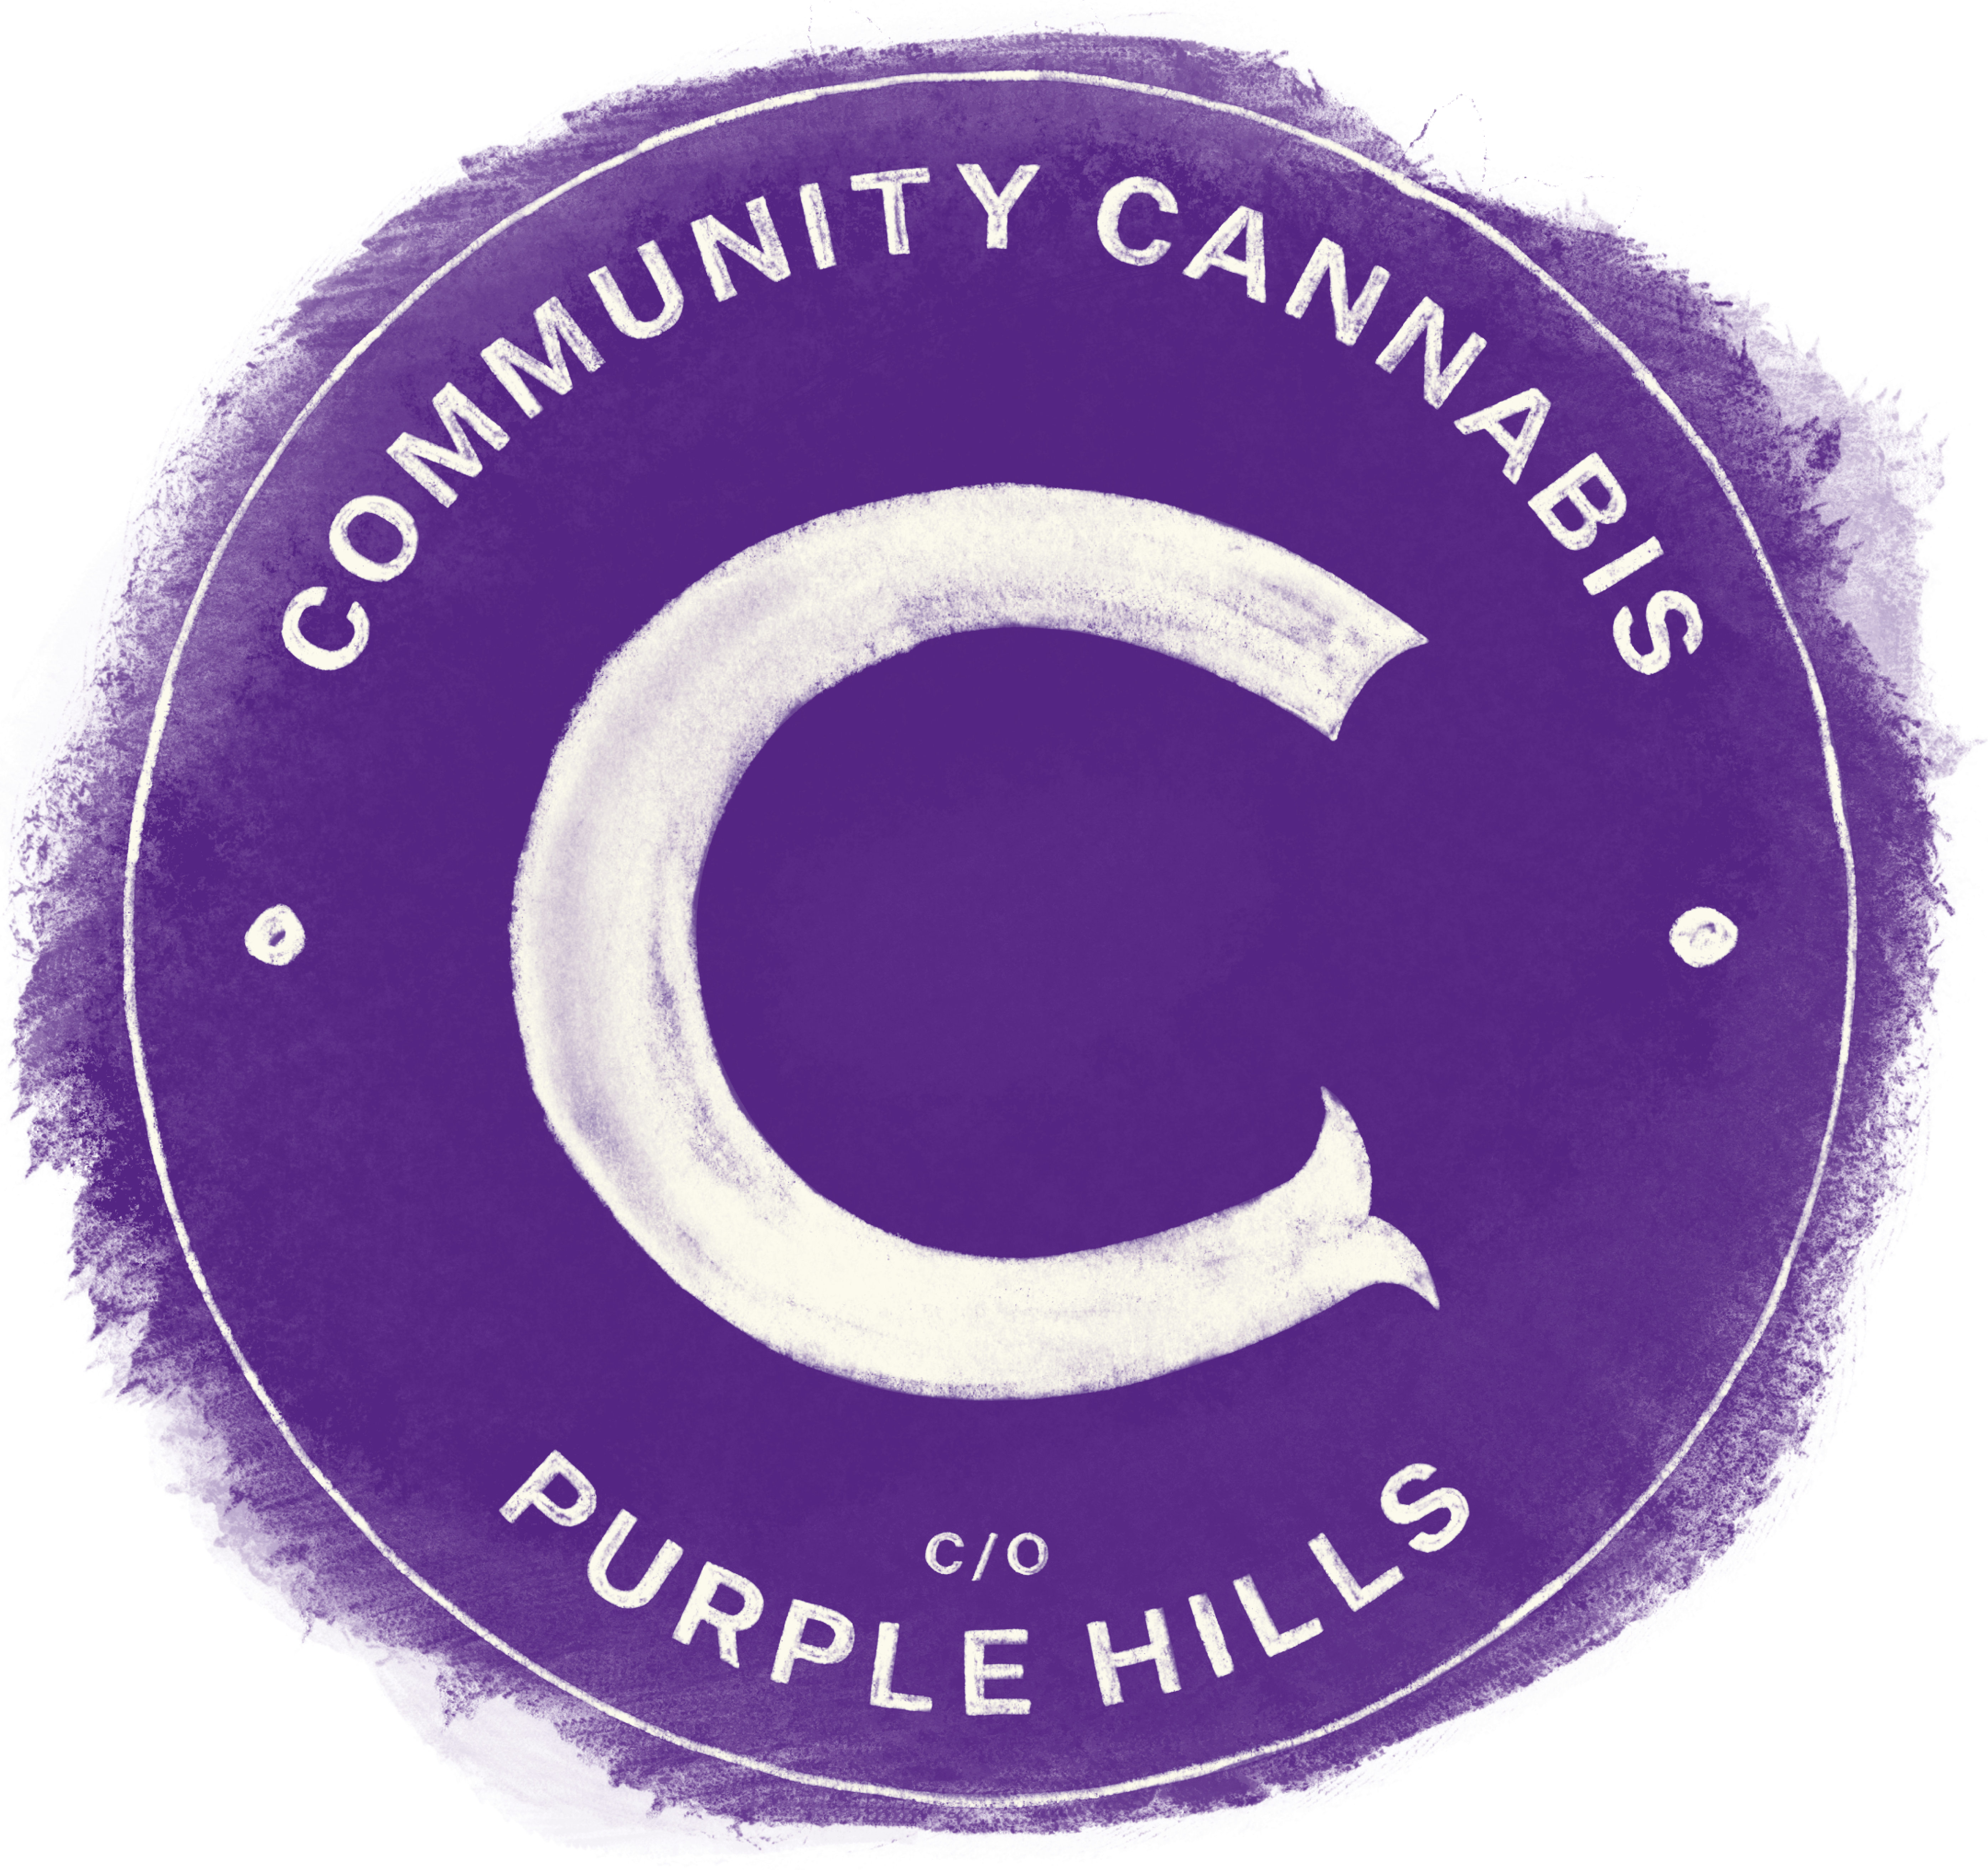 Cannabis Brand Community C/O Purple Hills